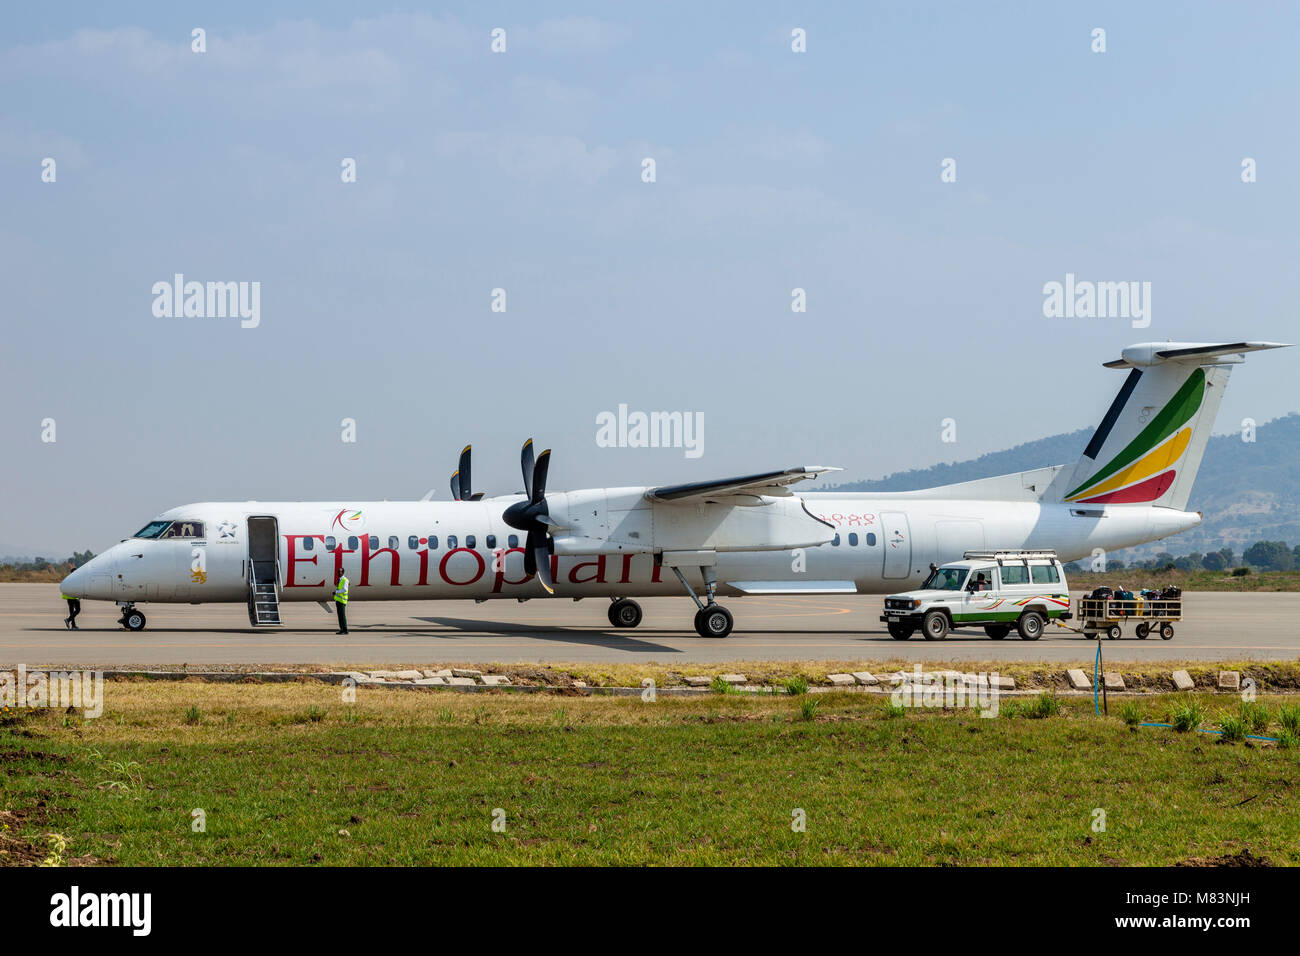 An Ethiopian Airlines Airplane At Jinka Airport, Omo Valley, Ethiopia Stock Photo